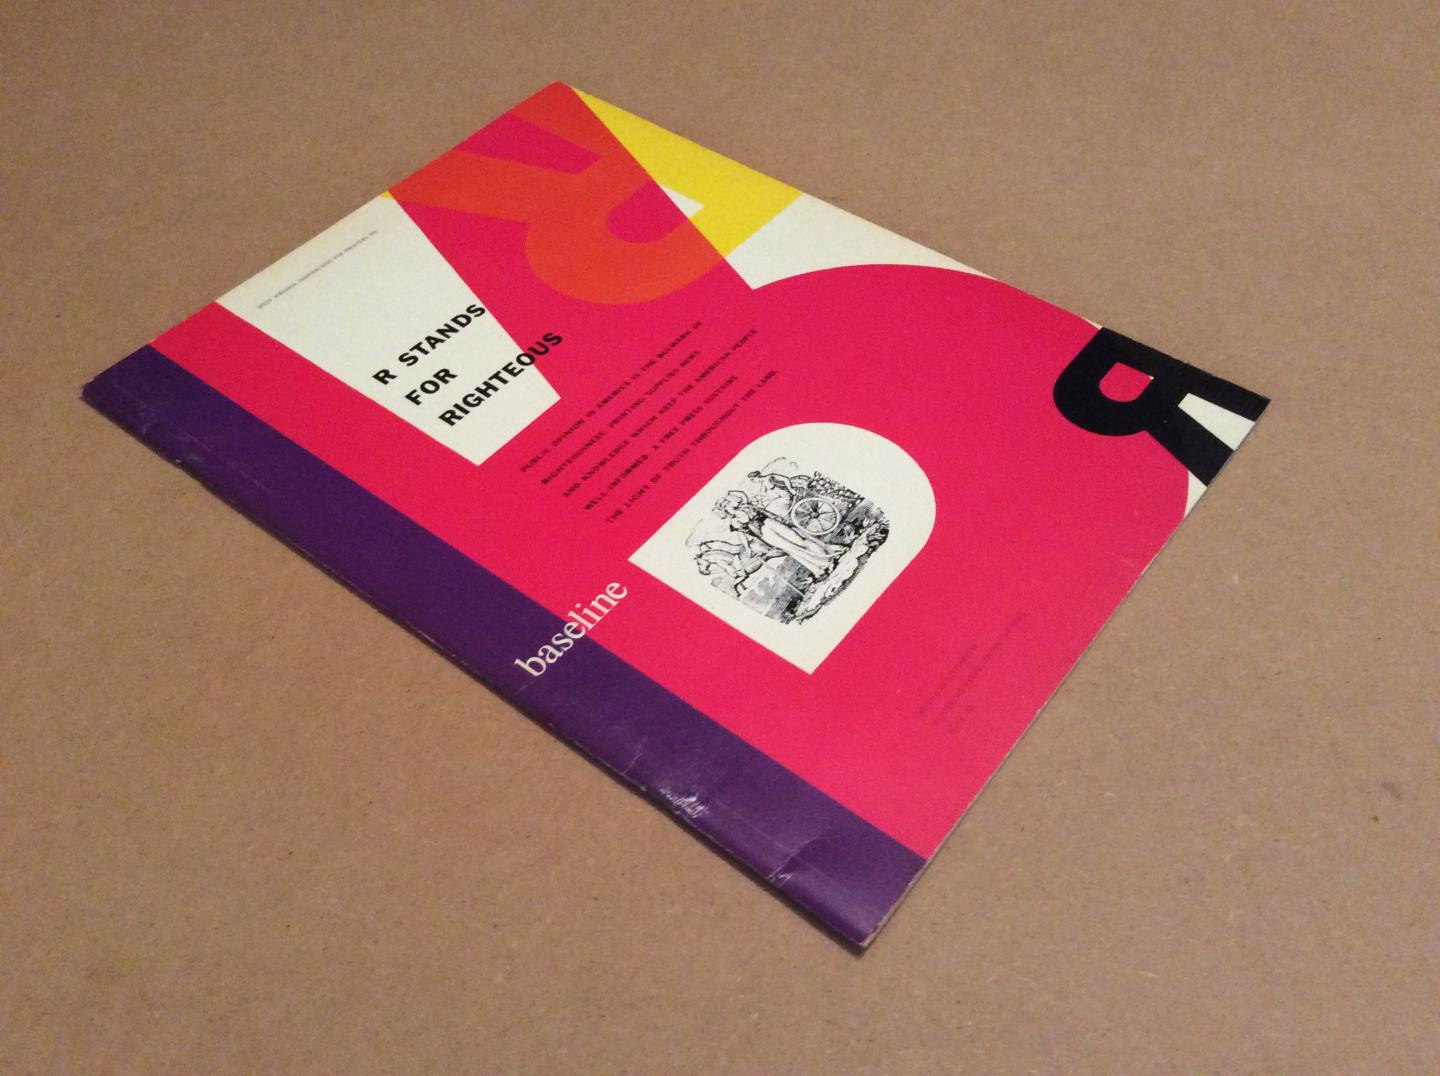 CAMPBELL, BOB EA. - Baseline - Bradbury Thompson Issue. Baseline International Typographics Journal